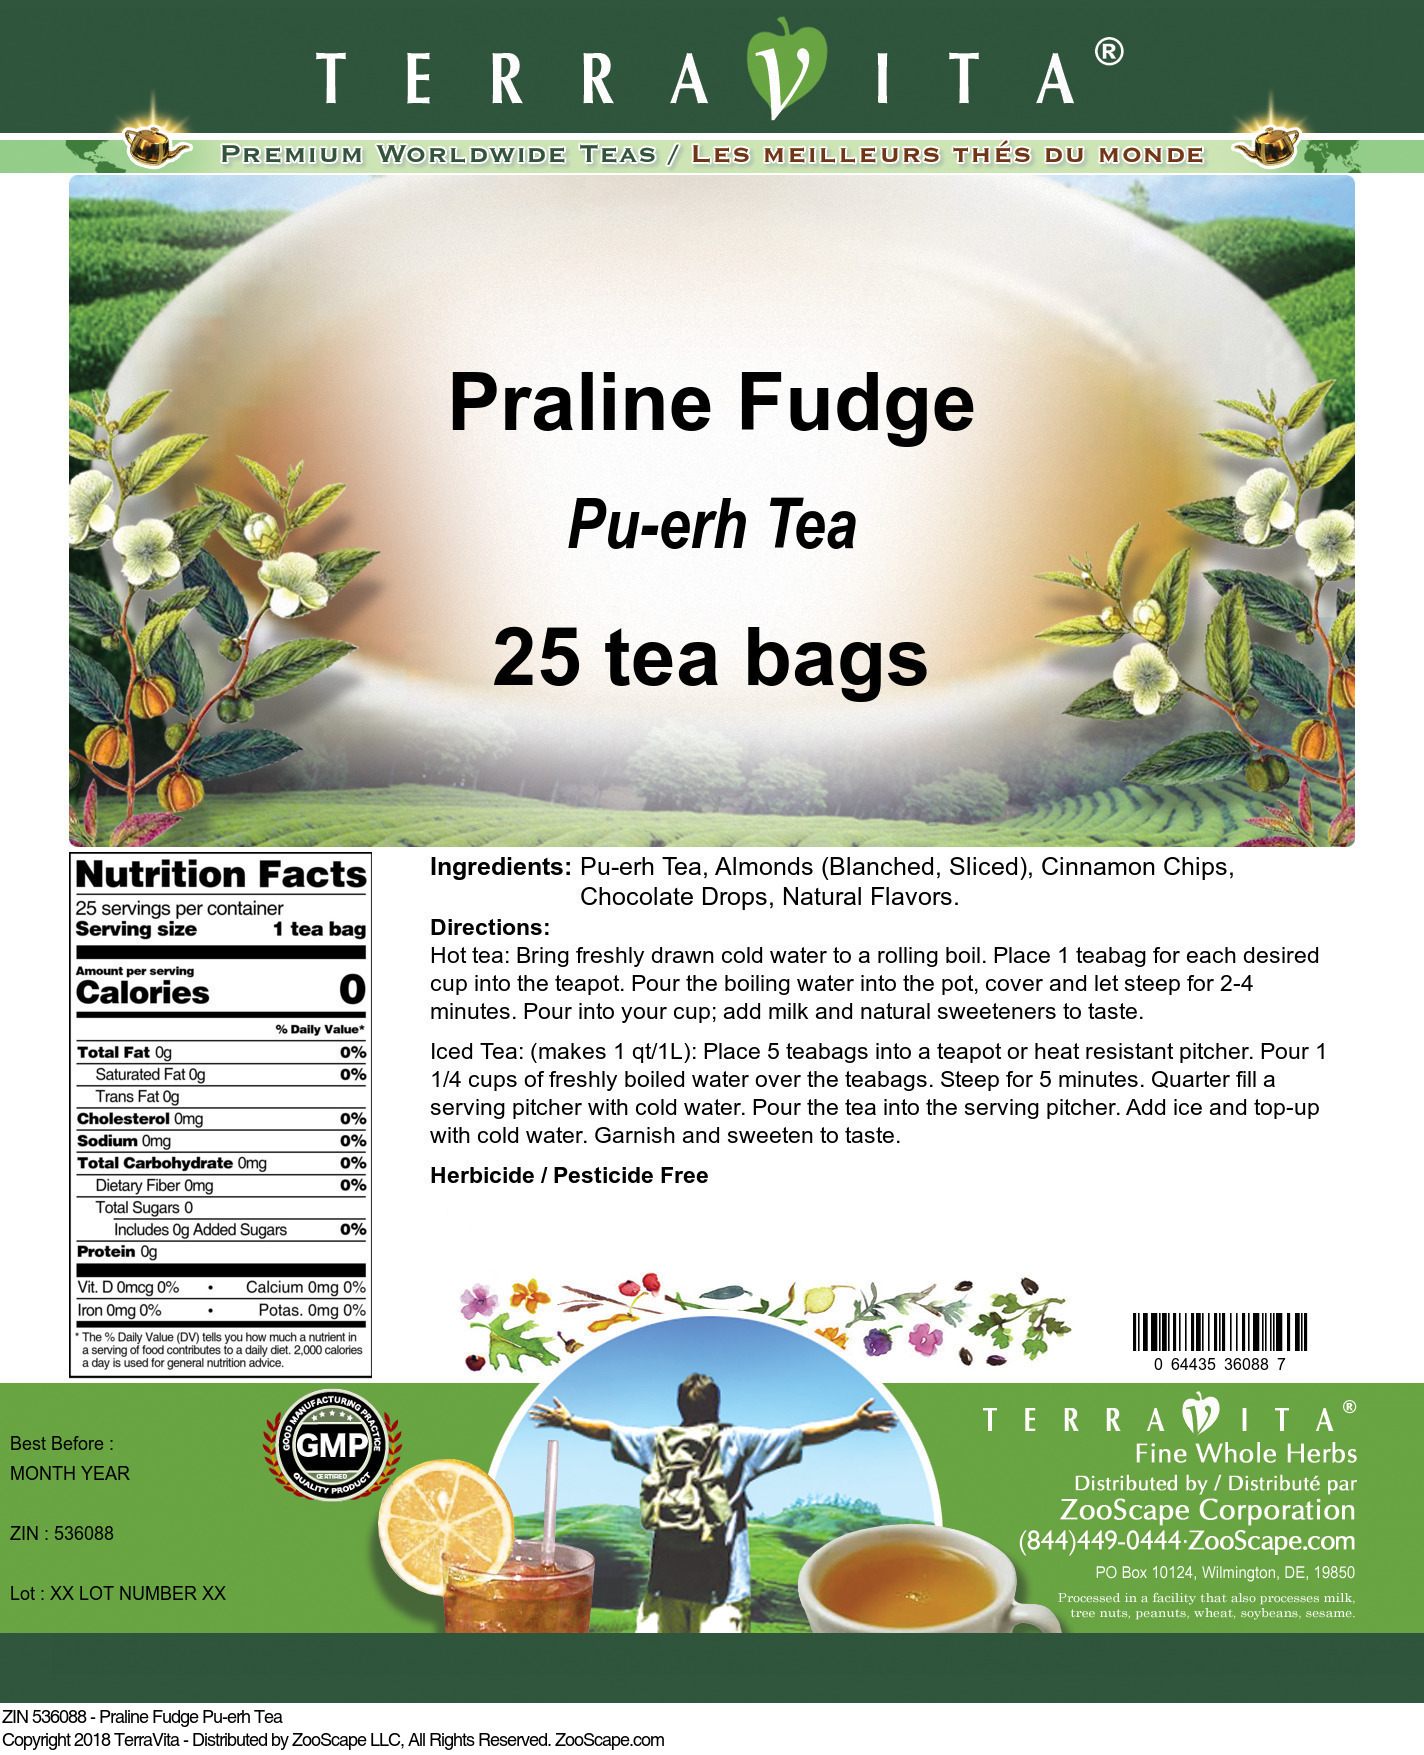 Praline Fudge Pu-erh Tea - Label